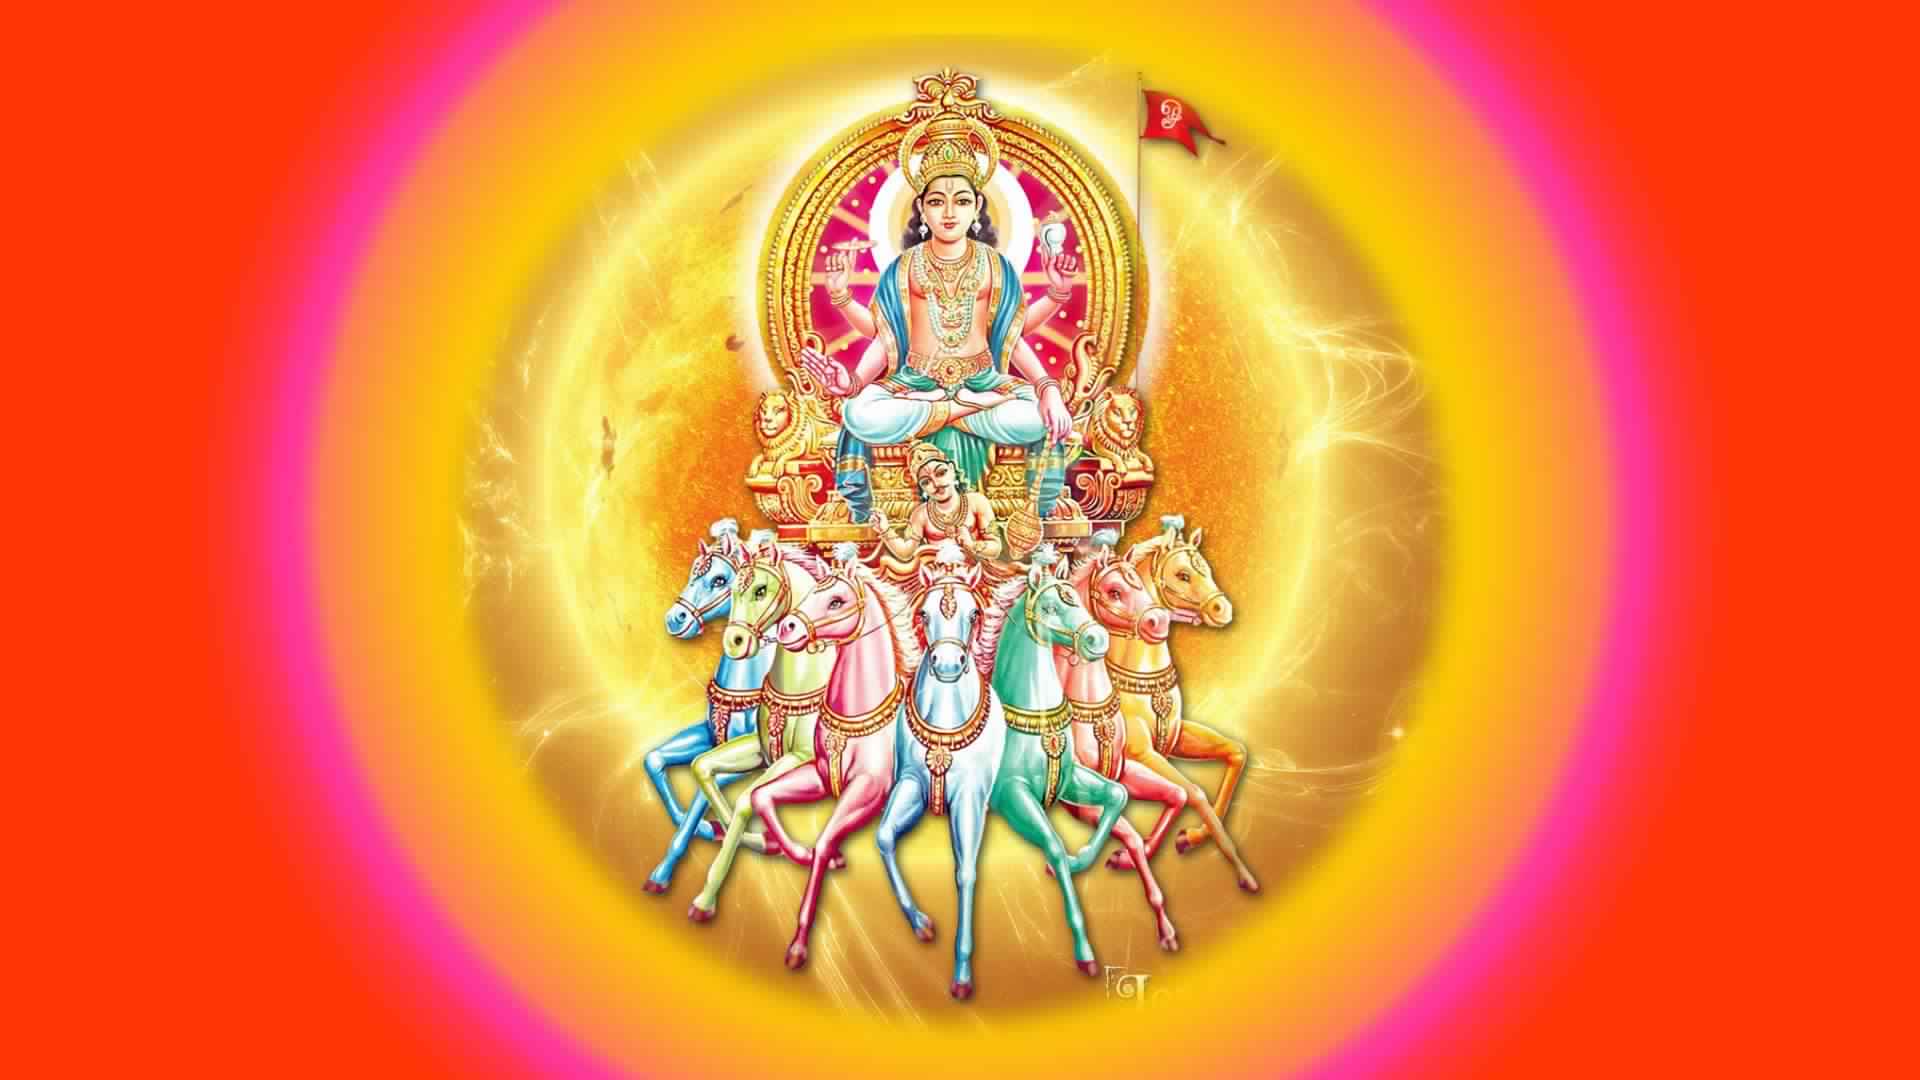 Shree Surya Dev Wallpaper Hindu Gods And Goddesses